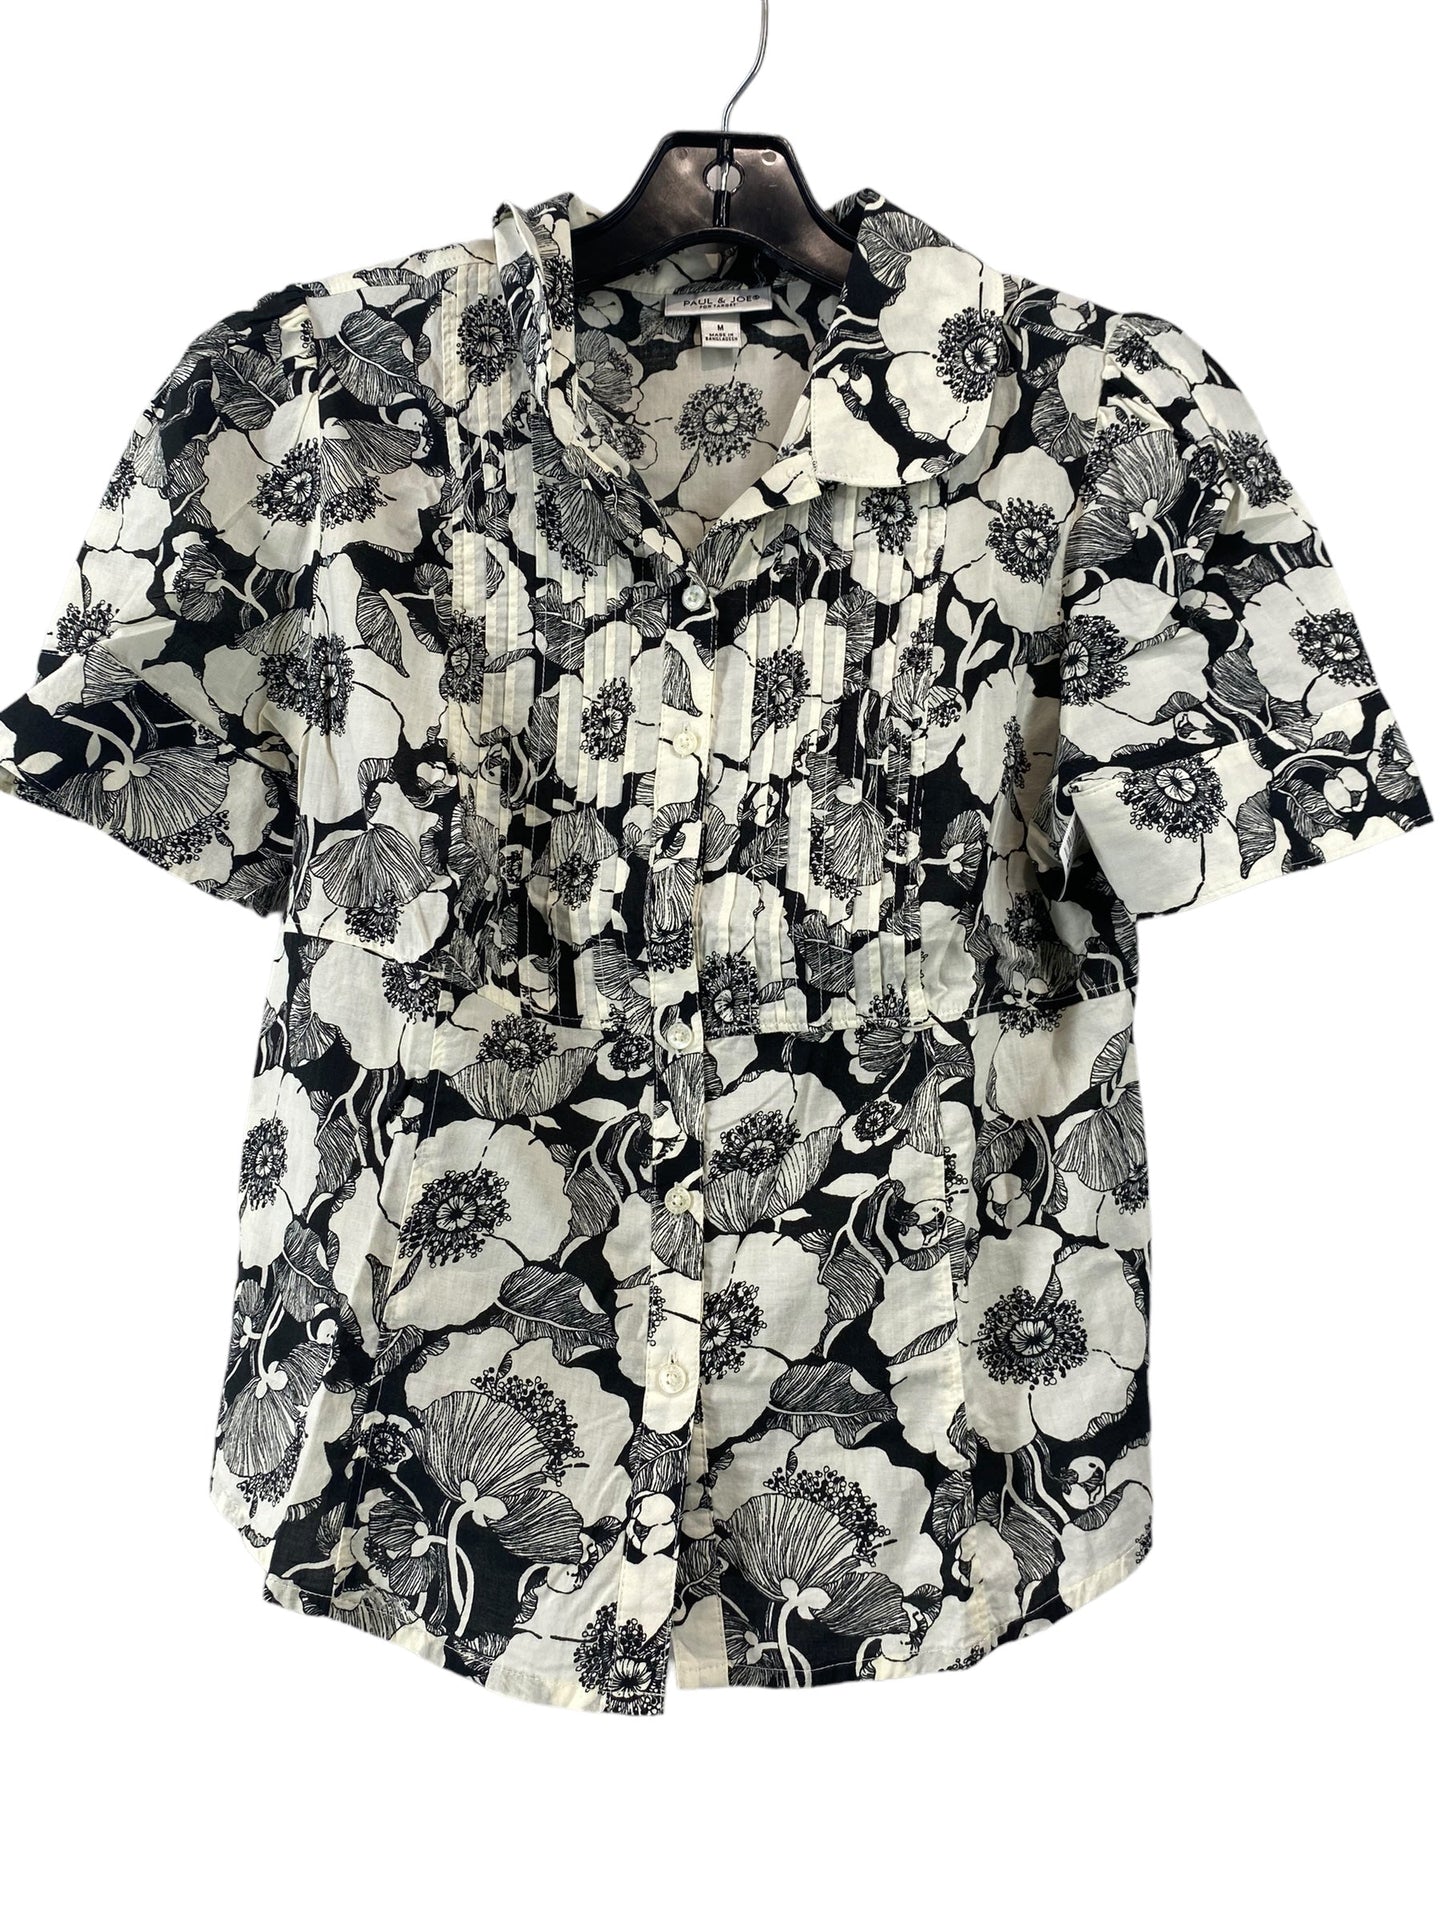 Black & White Top Short Sleeve Target-designer, Size M